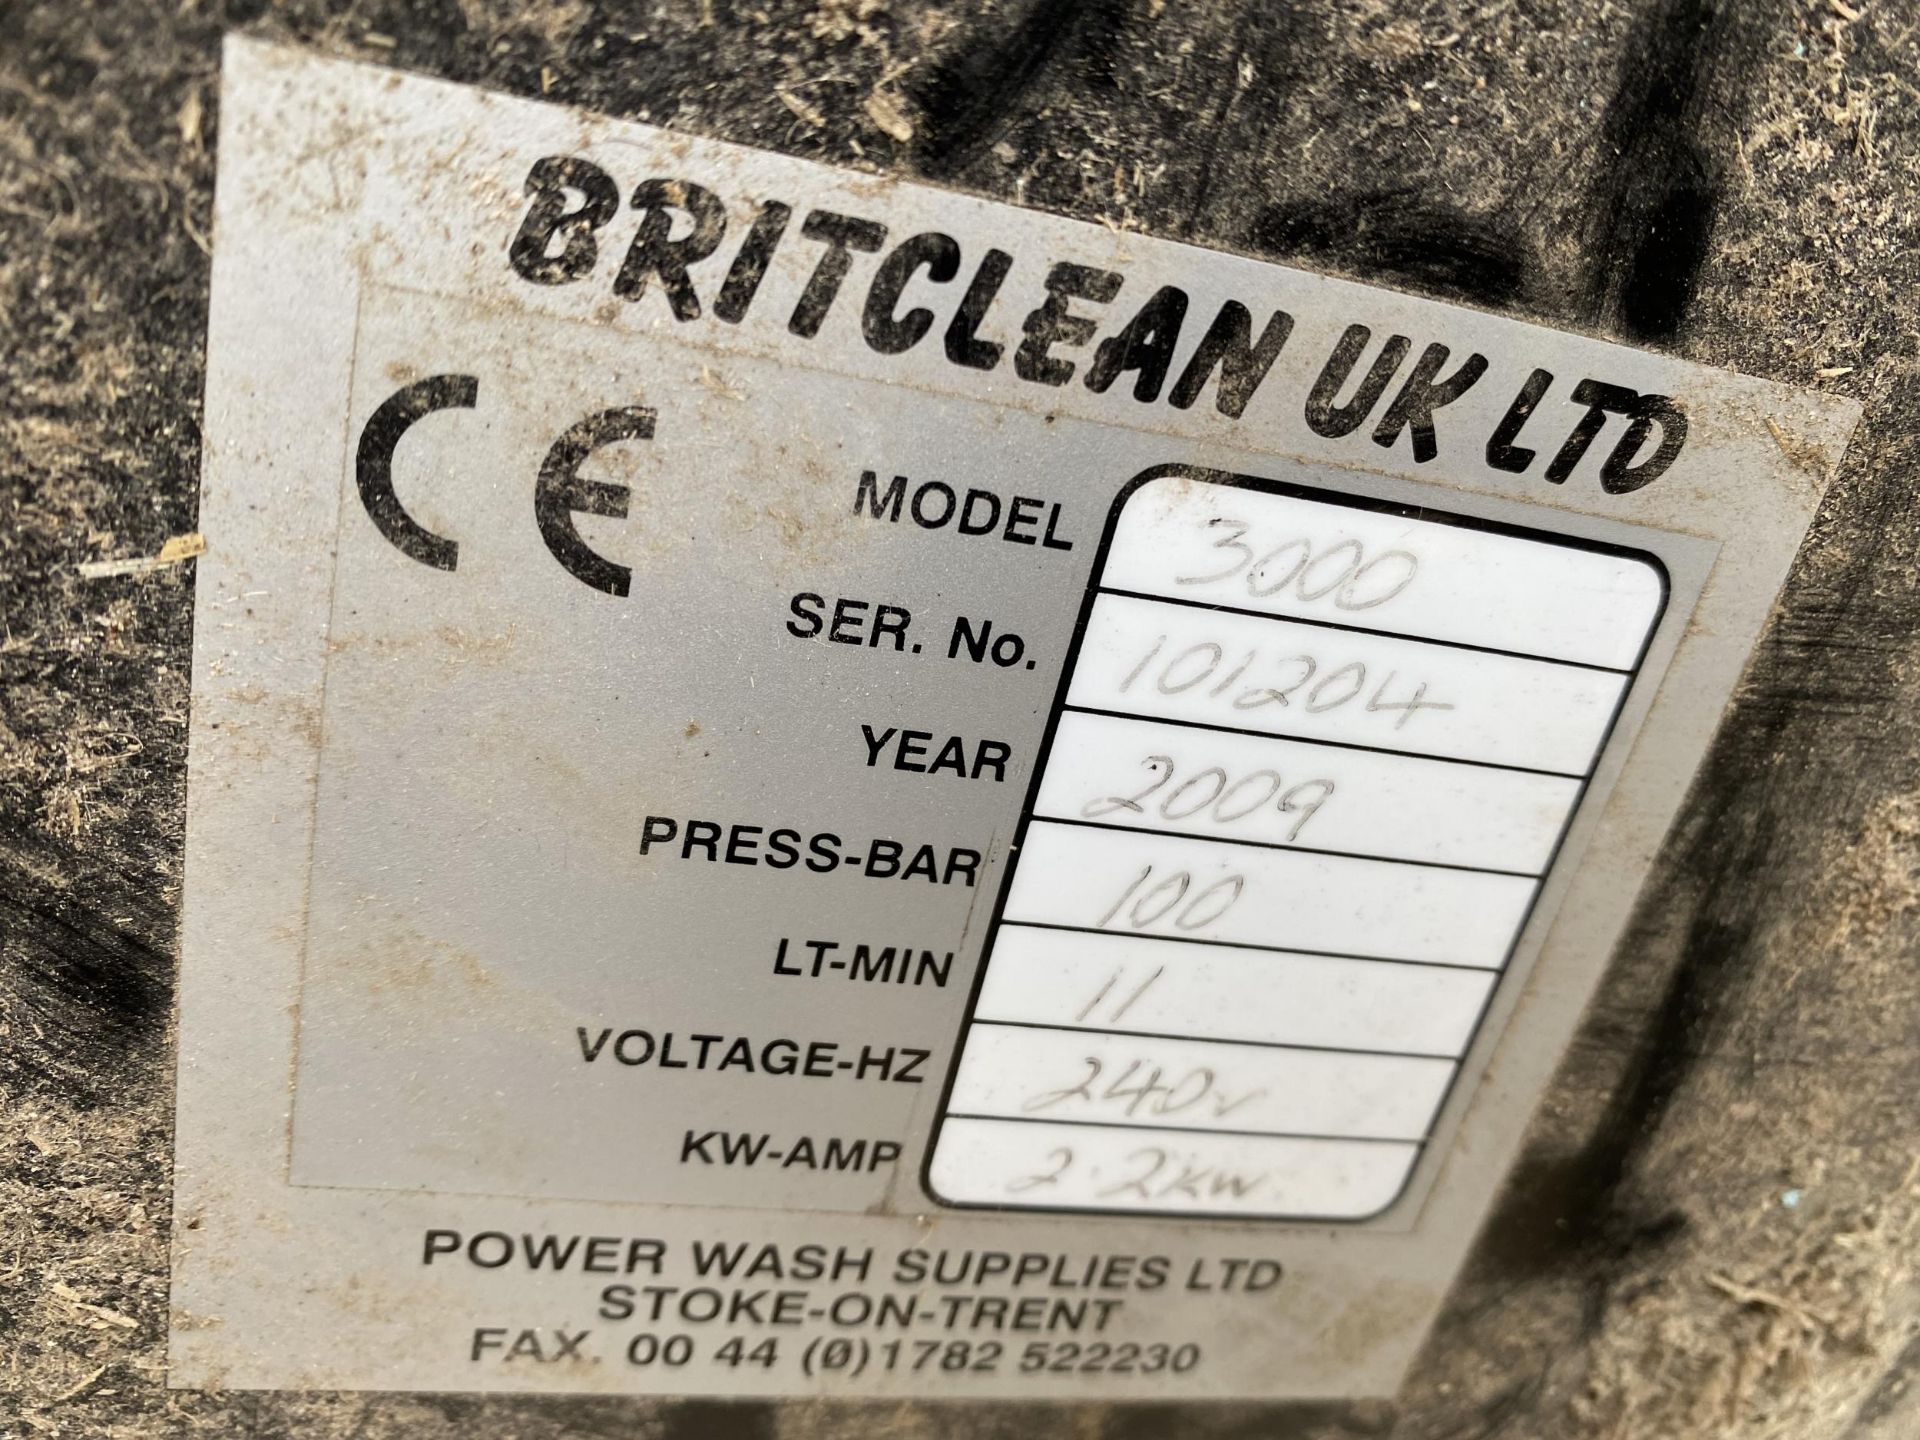 2009 BRITCLEAN 24V STEAM CLEANER GOOD WORKING ORDER + VAT - Image 4 of 4